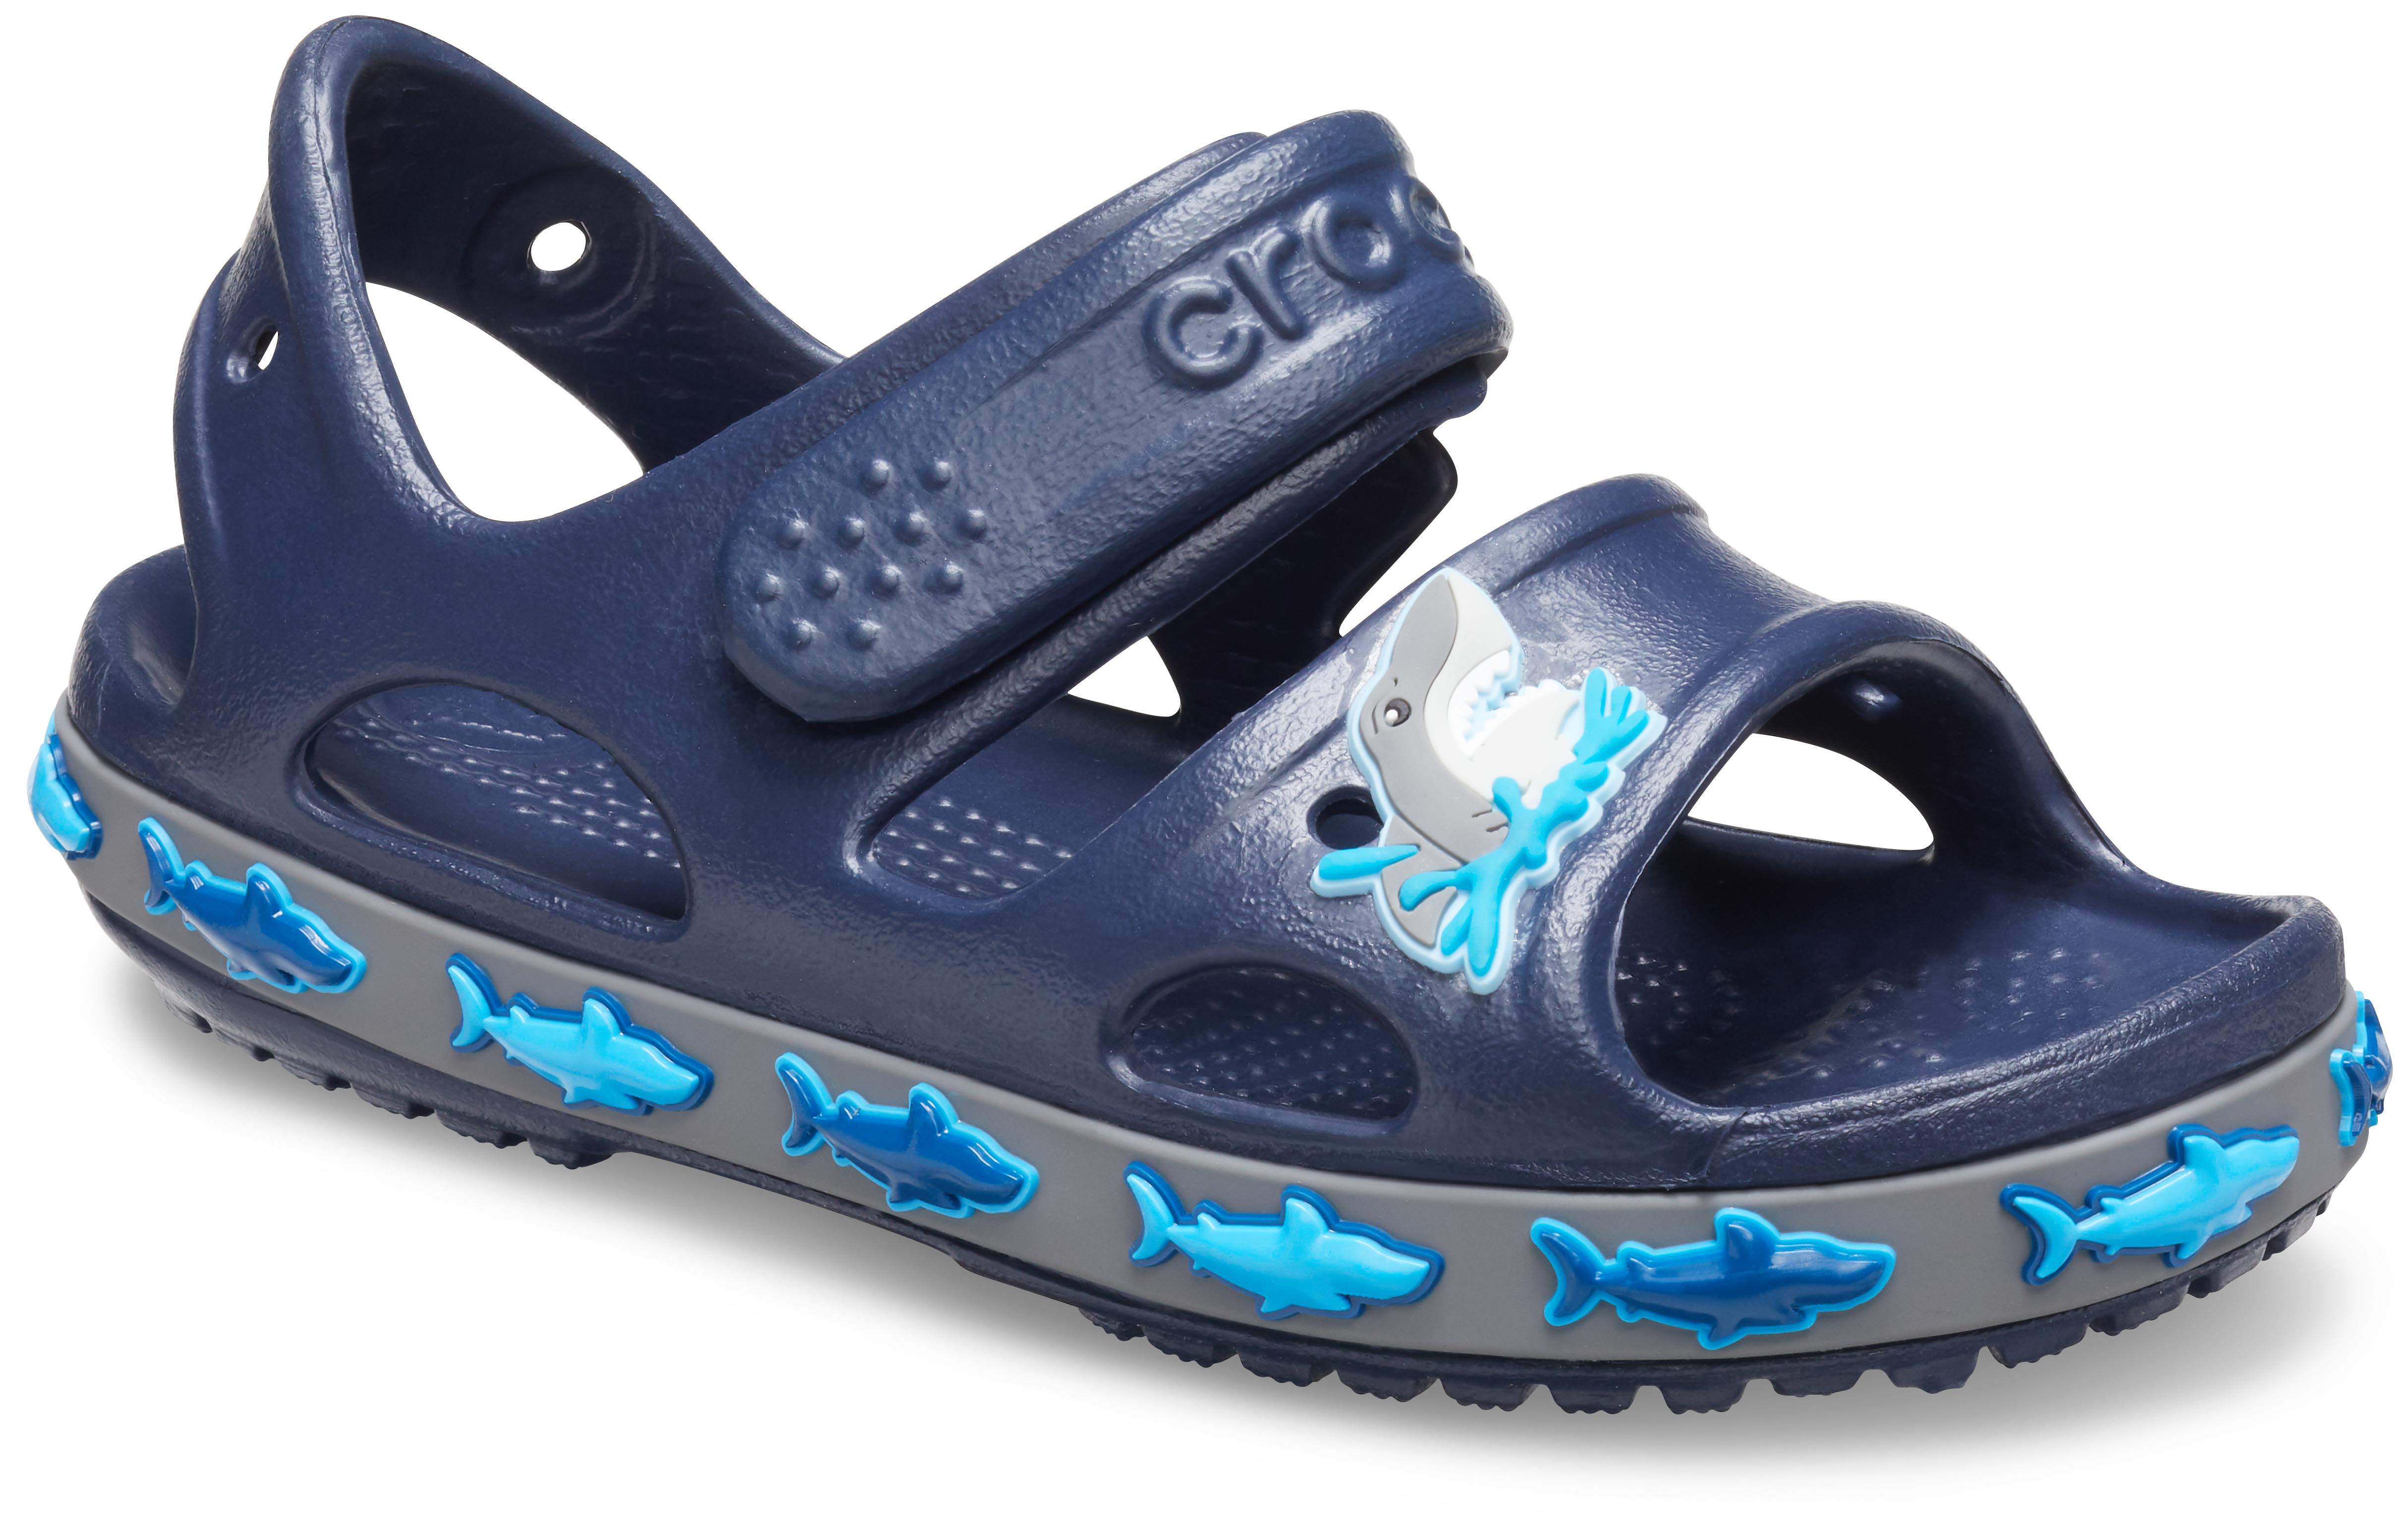 crocs infant sandals